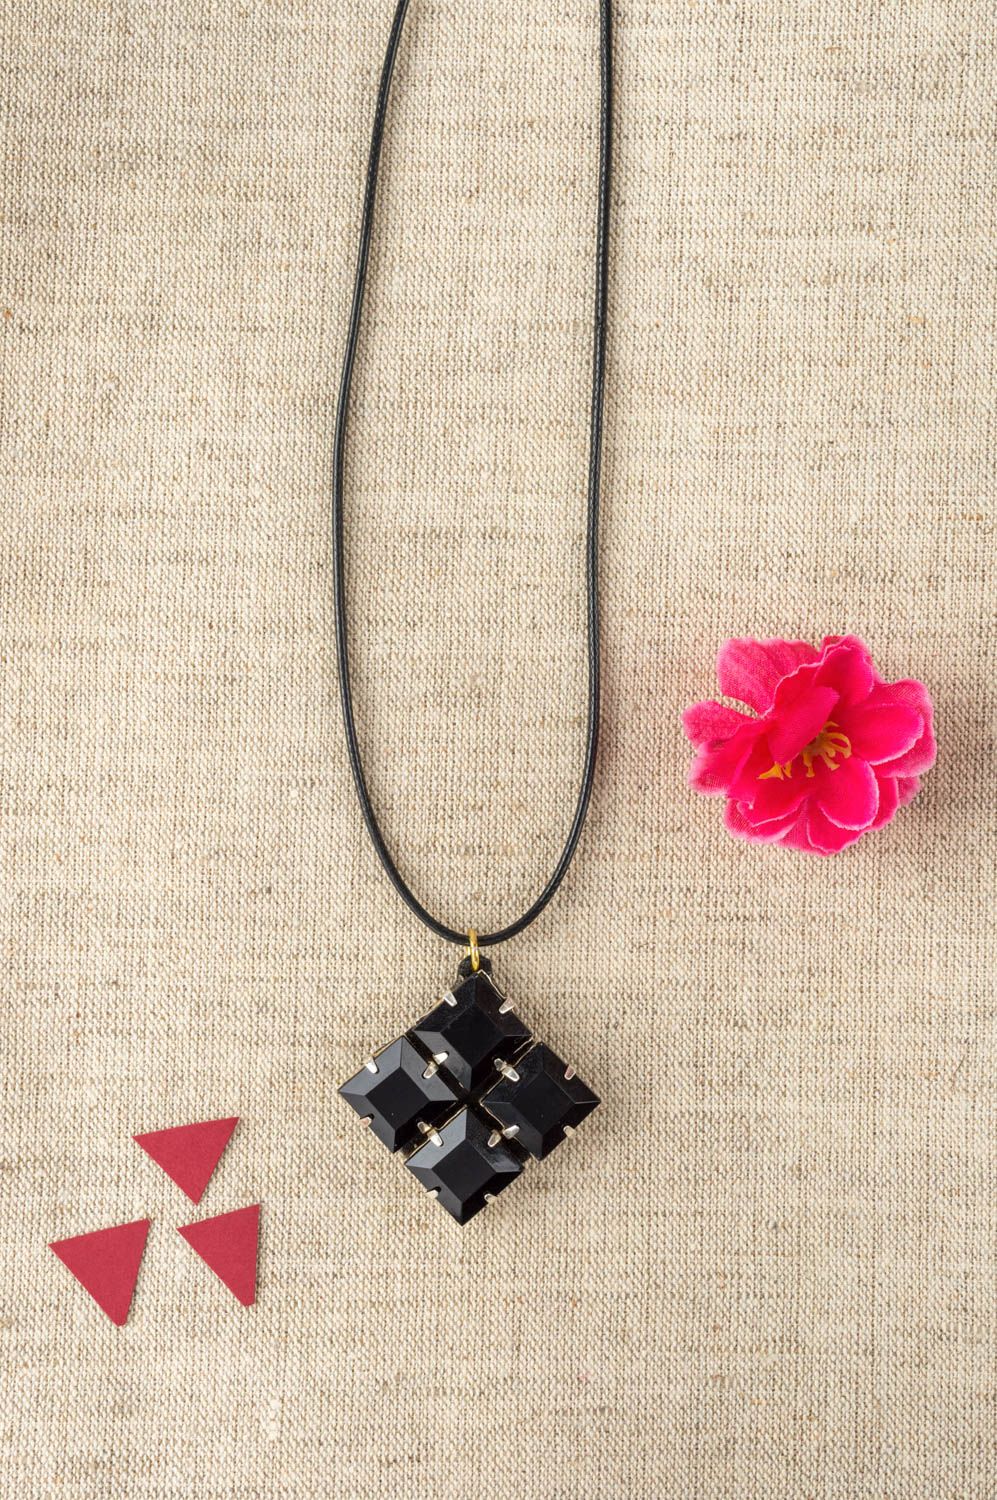 Handmade beautiful pendant unusual necklace made of plastic beads cute accessory photo 1